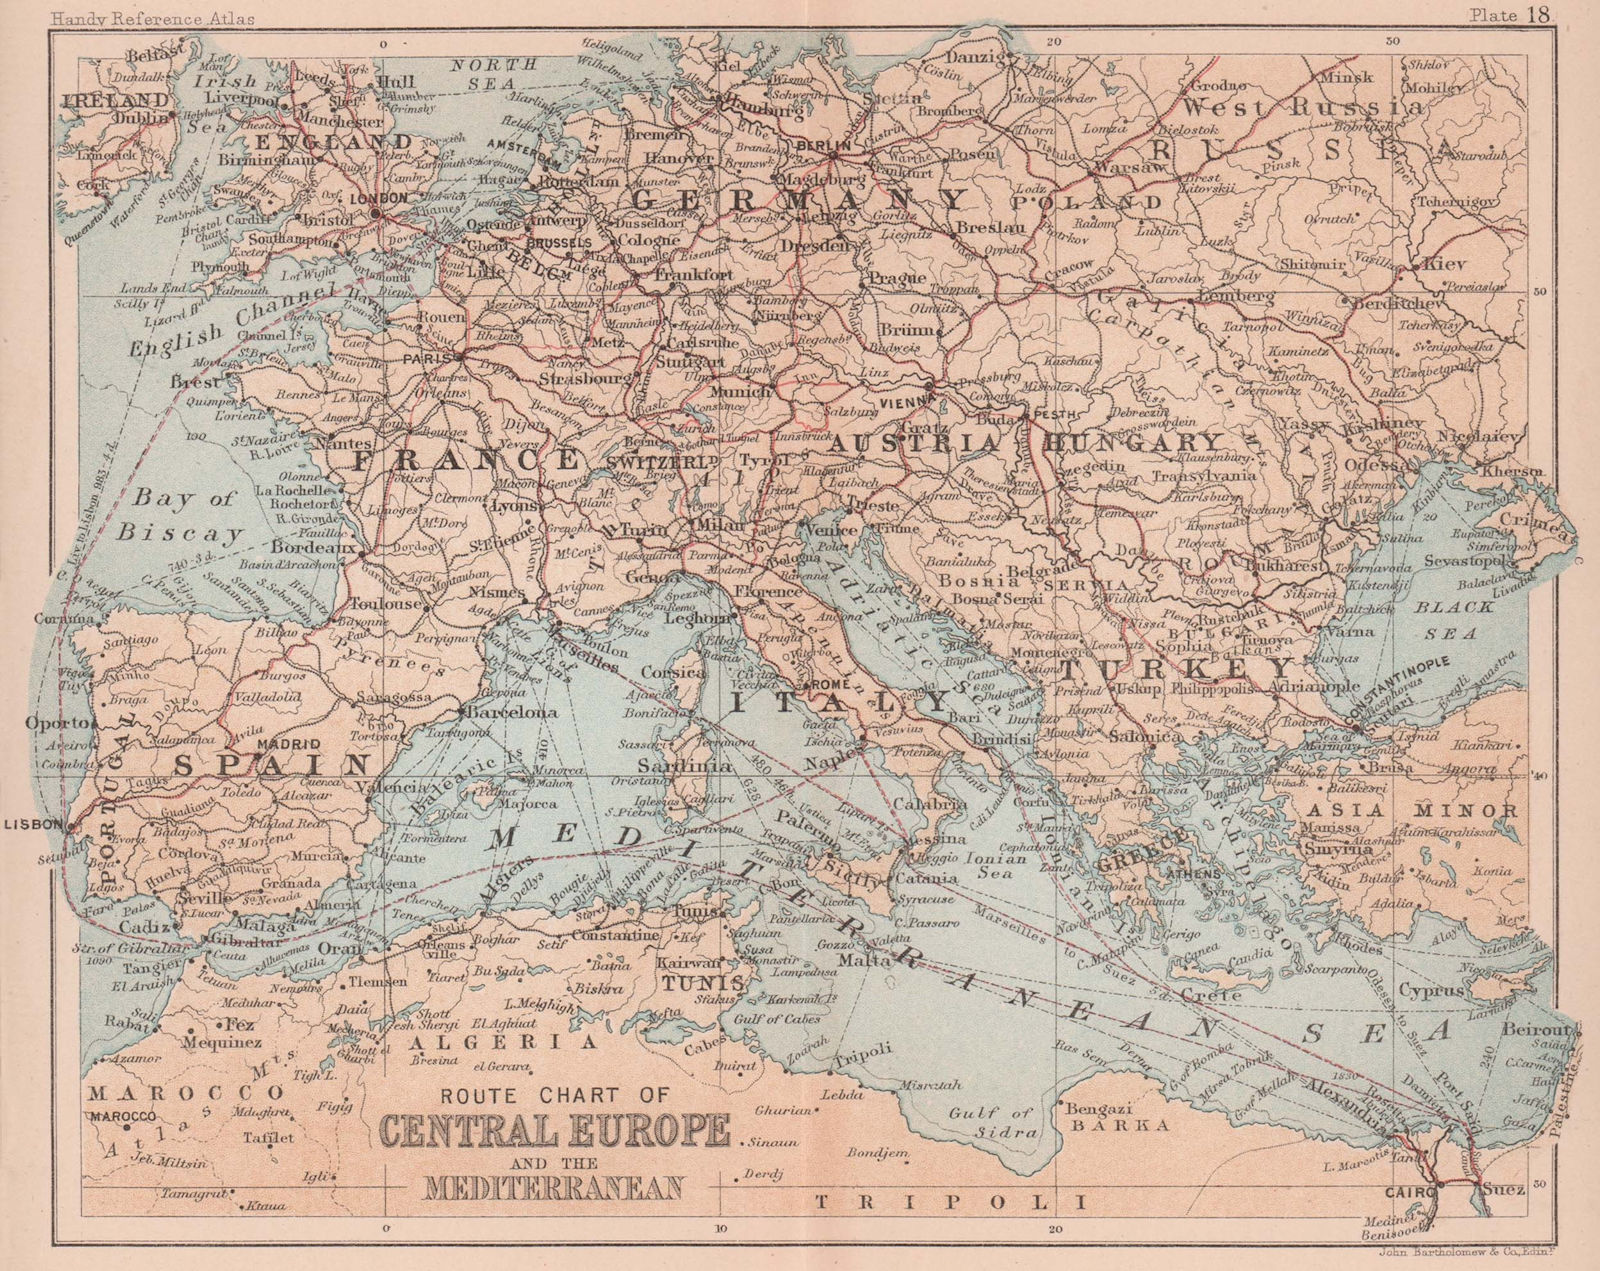 Central Europe & Mediterranean routes. Railways. Steamers. BARTHOLOMEW 1893 map